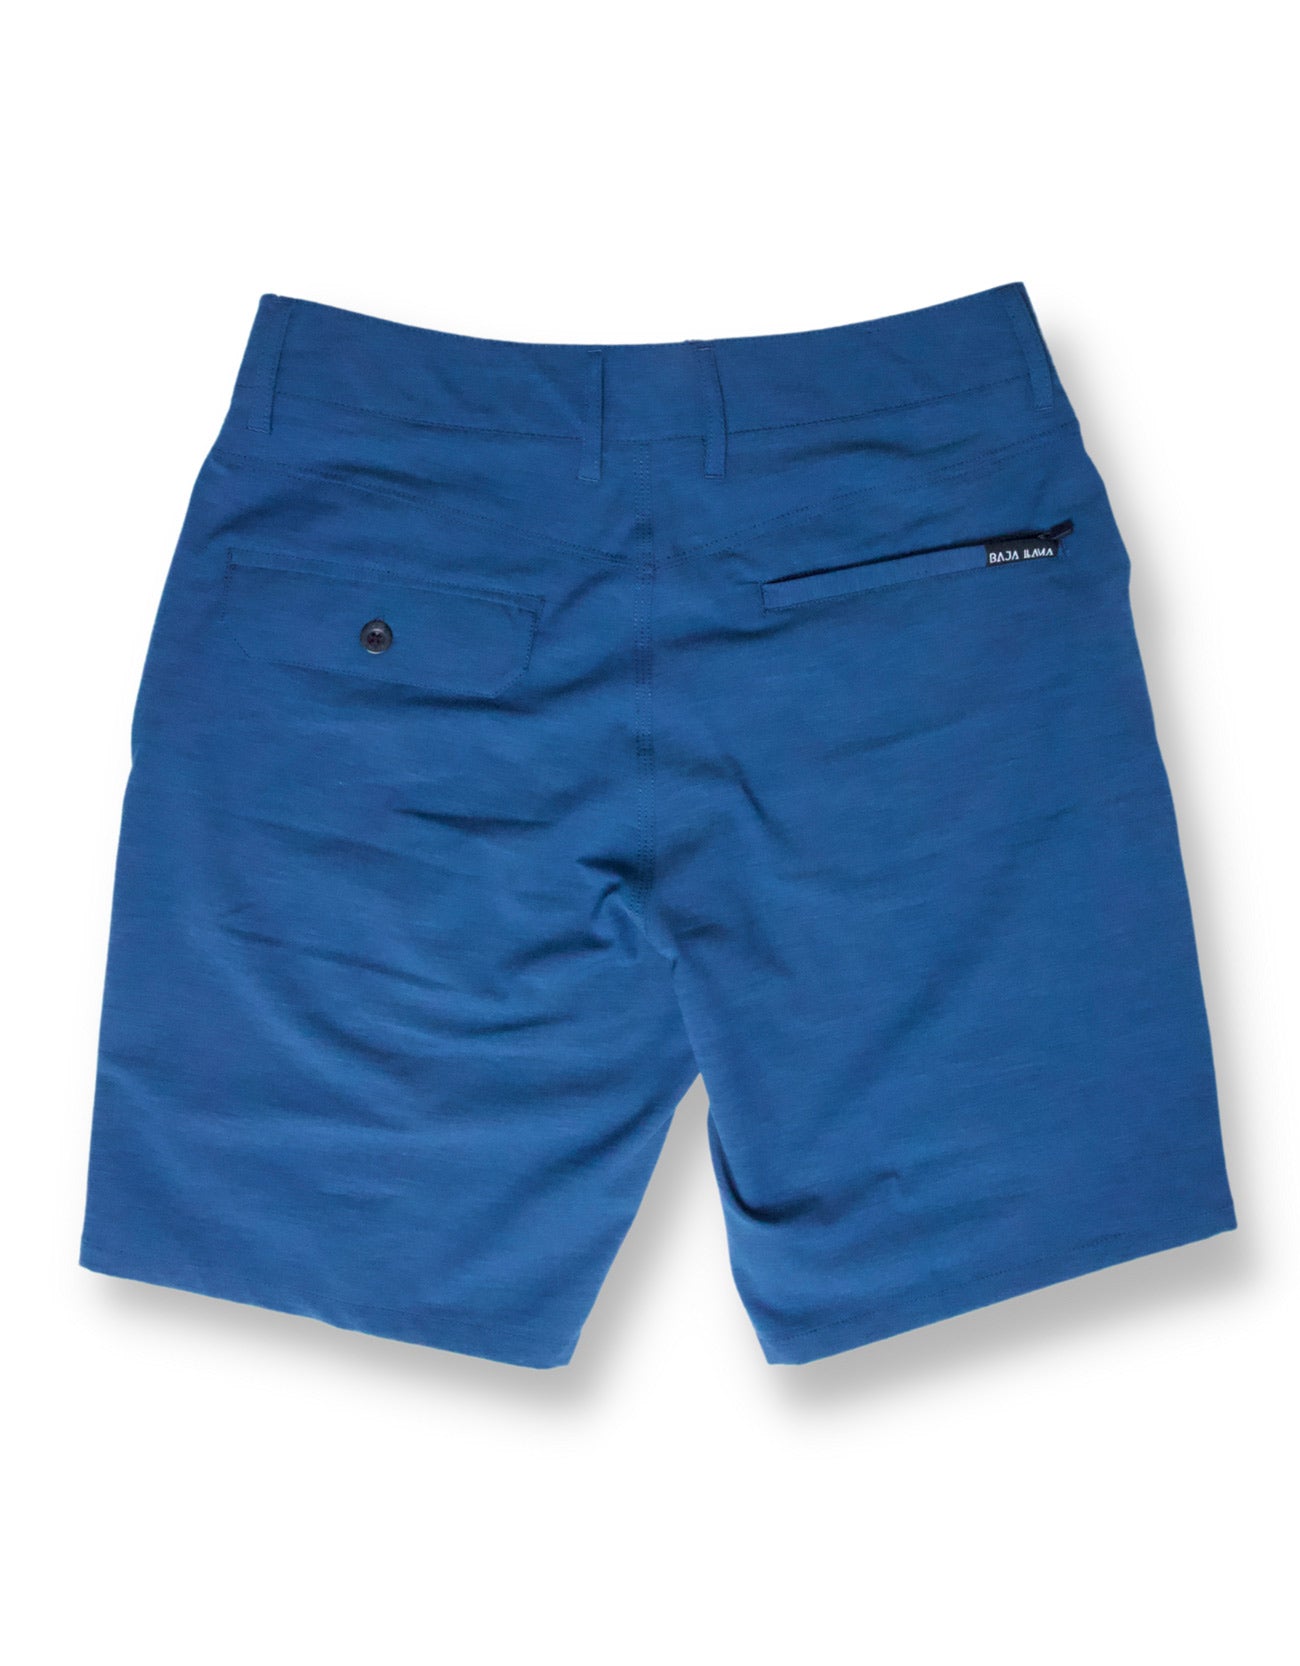 Baja Llama's Sunday Sports Navy Blue Hybrid Athletic Shorts